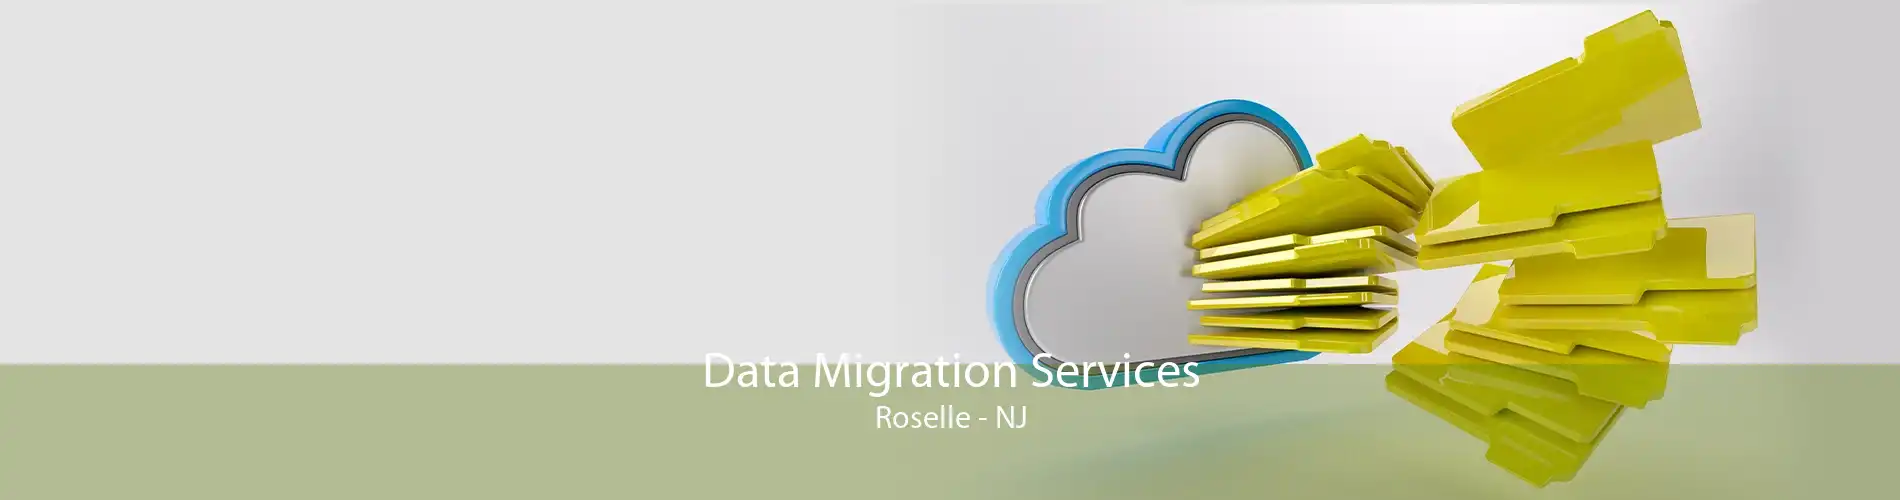 Data Migration Services Roselle - NJ